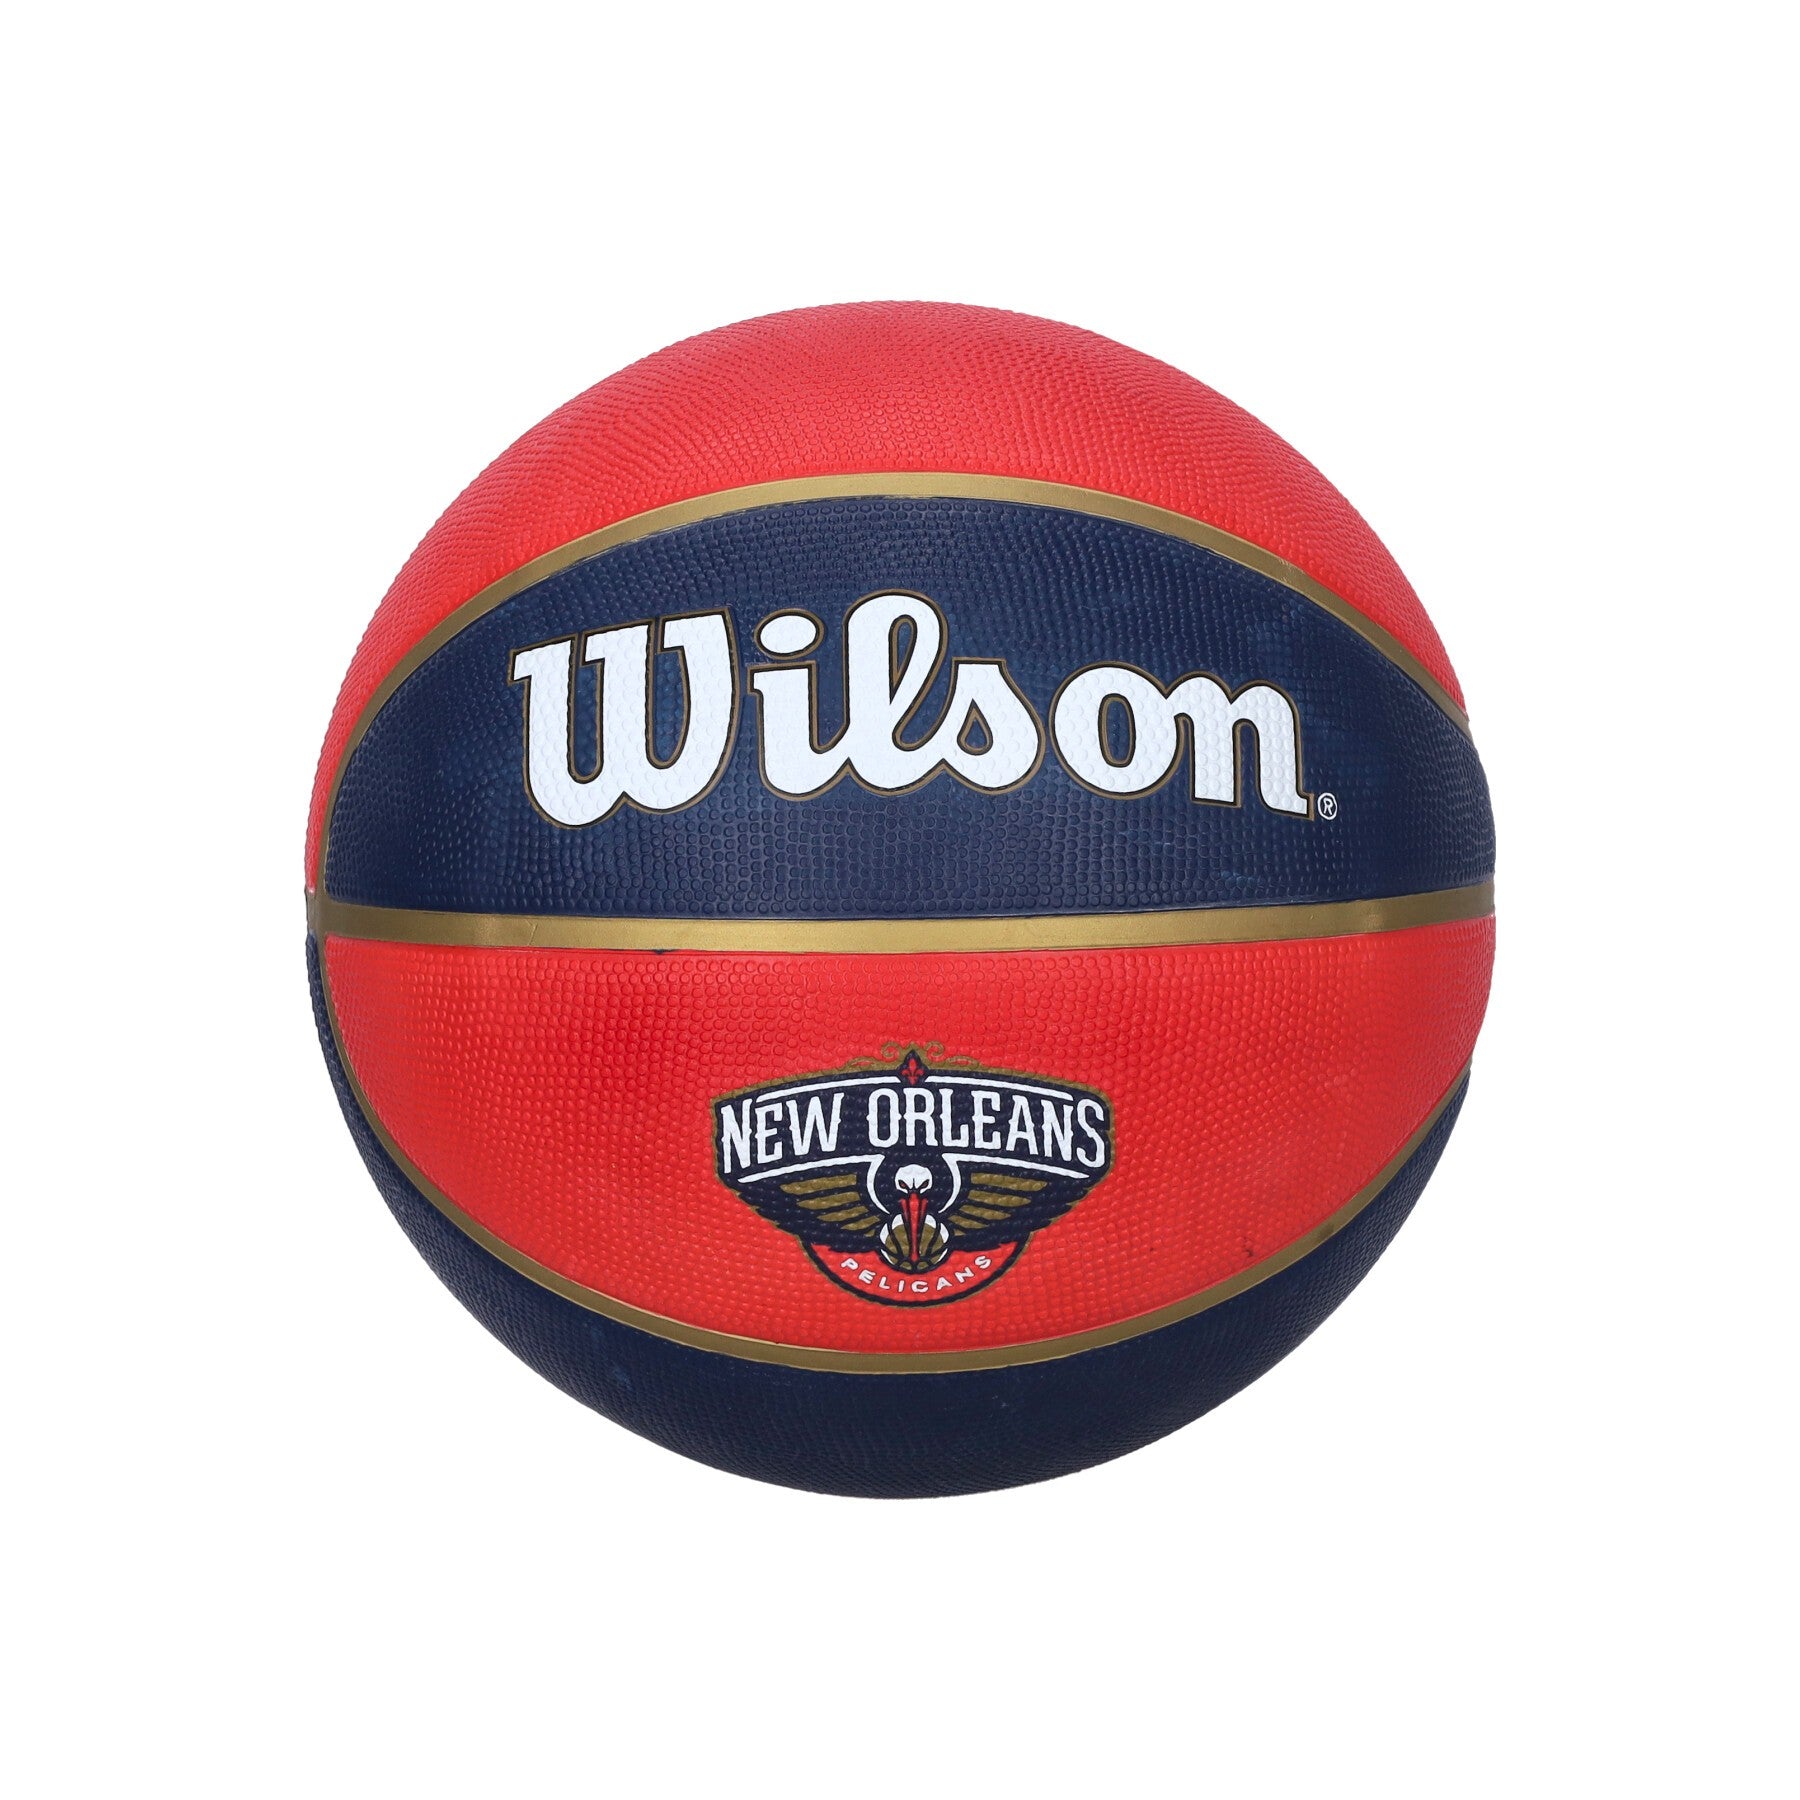 Wilson Team, Pallone Uomo Nba Team Tribute Basketball Size 7 Neopel, Original Team Colors